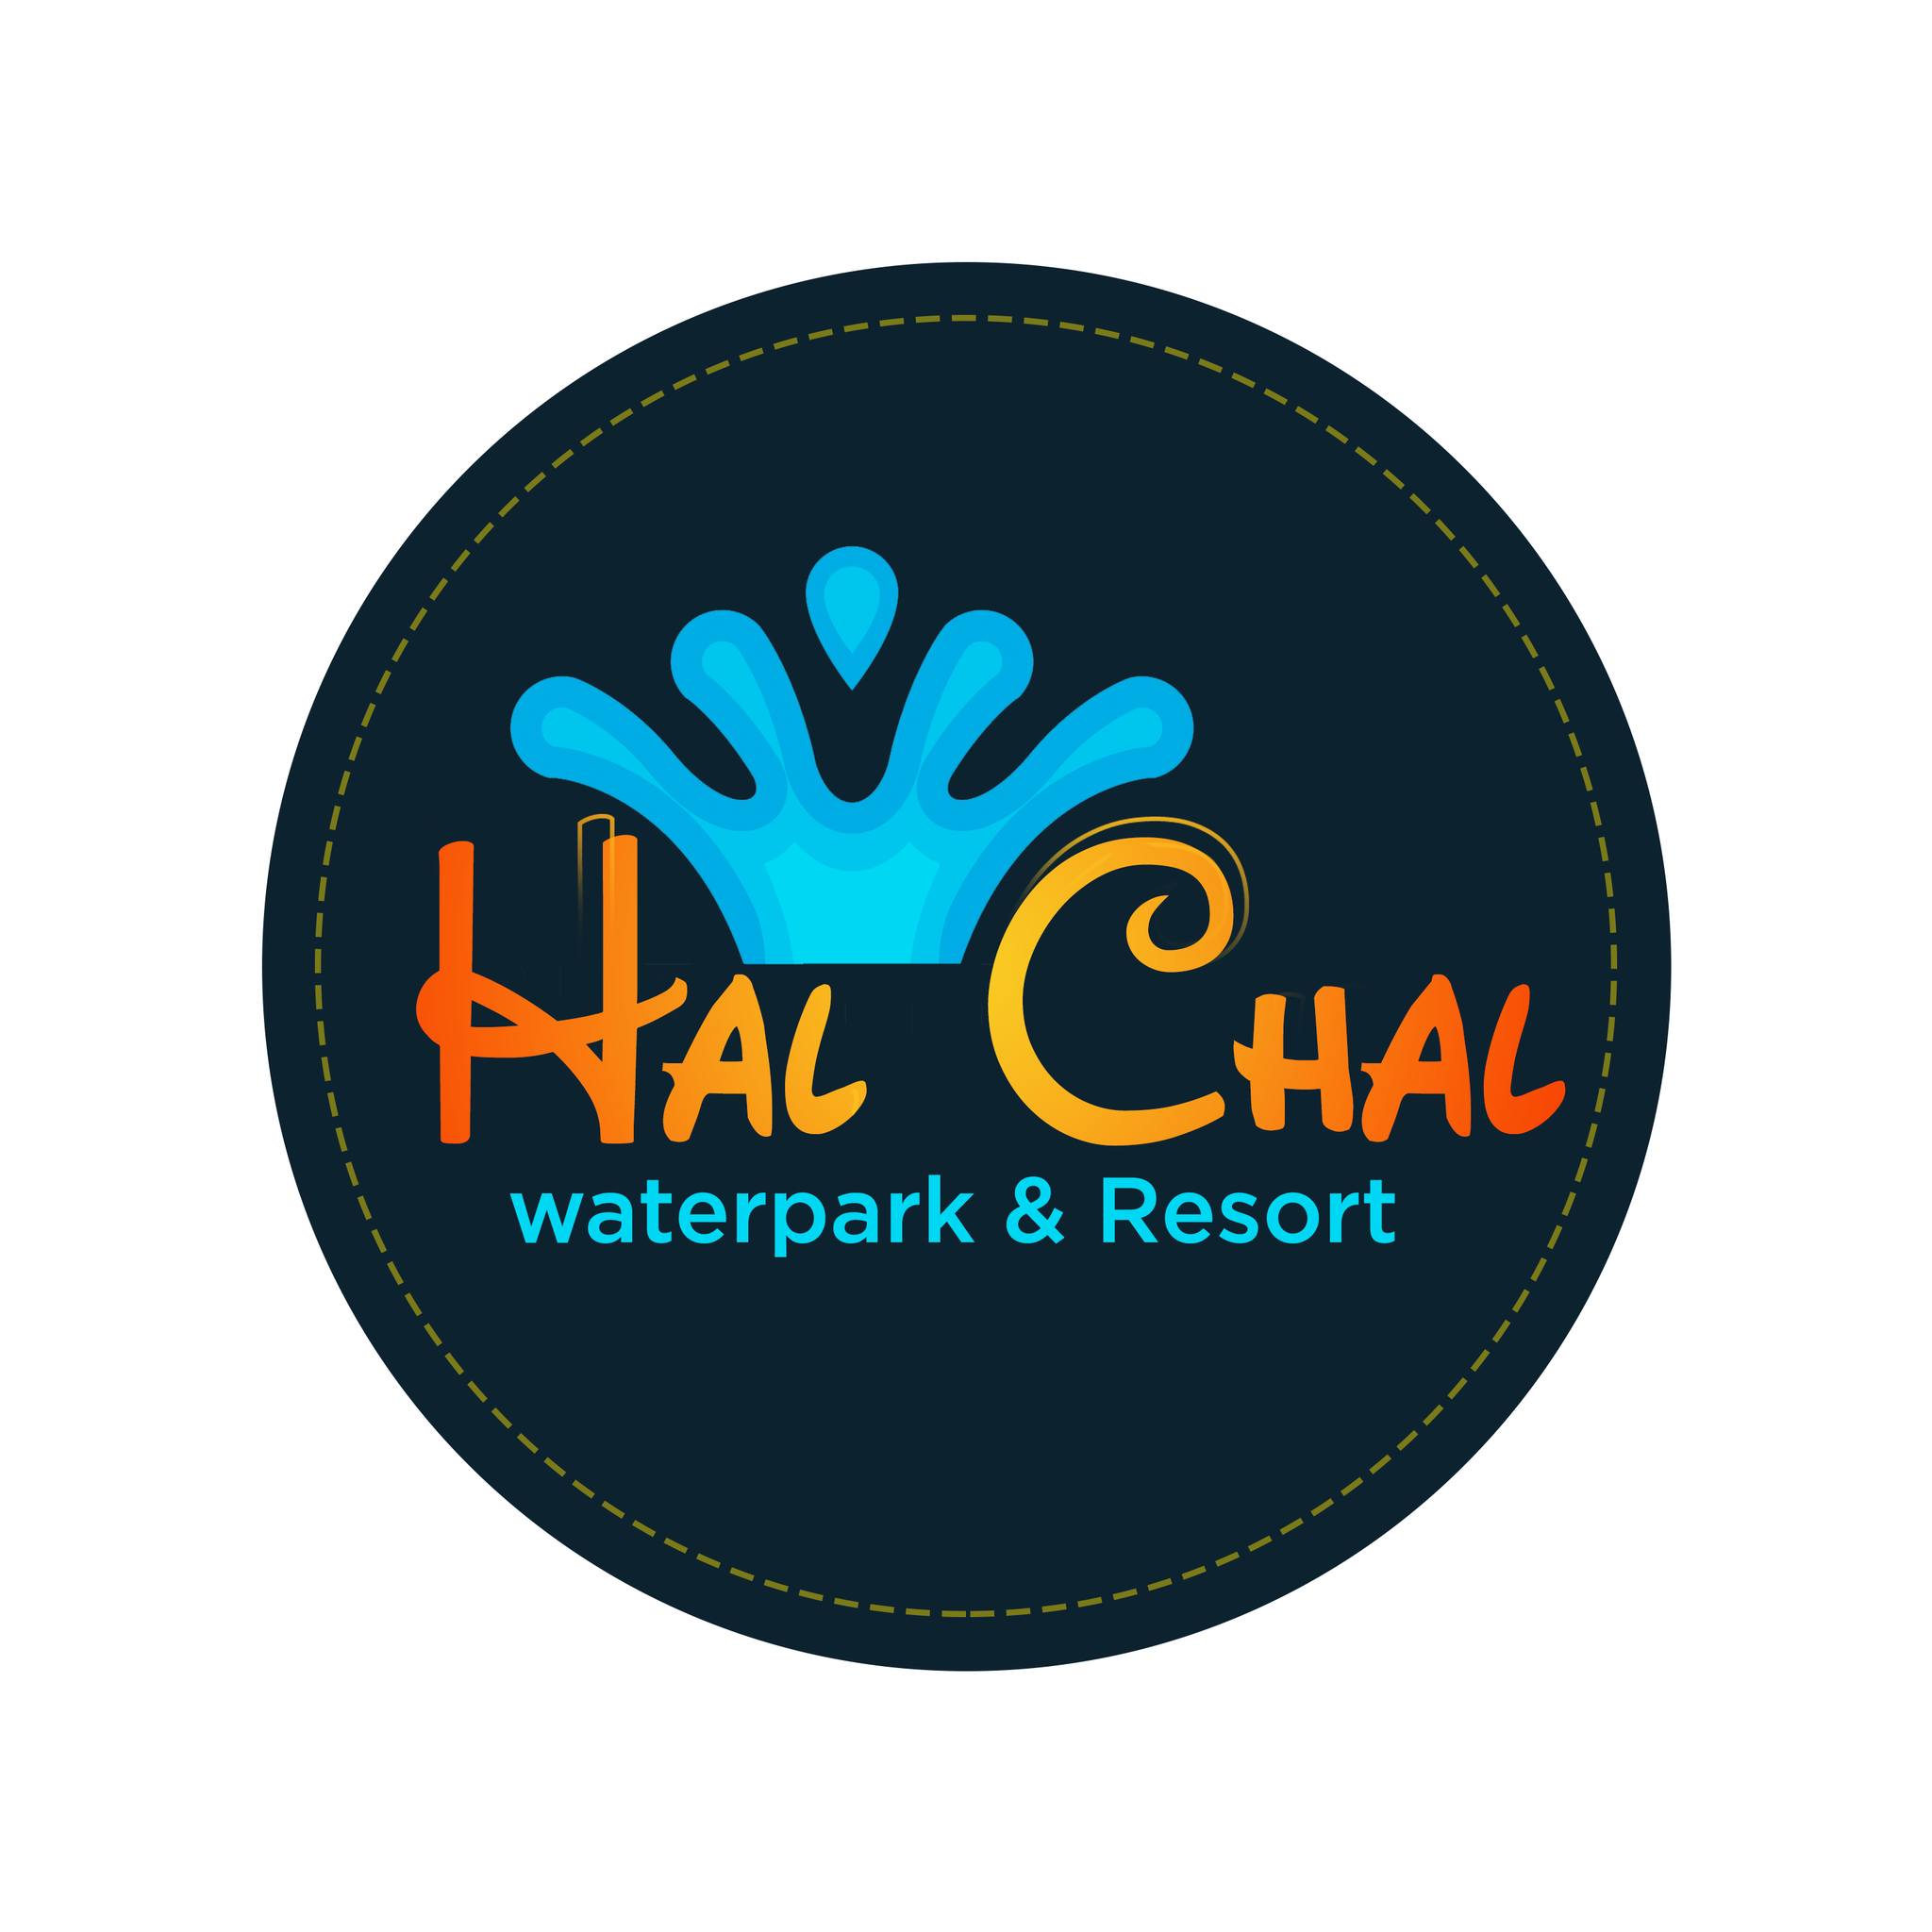 Halchal Waterpark|Movie Theater|Entertainment